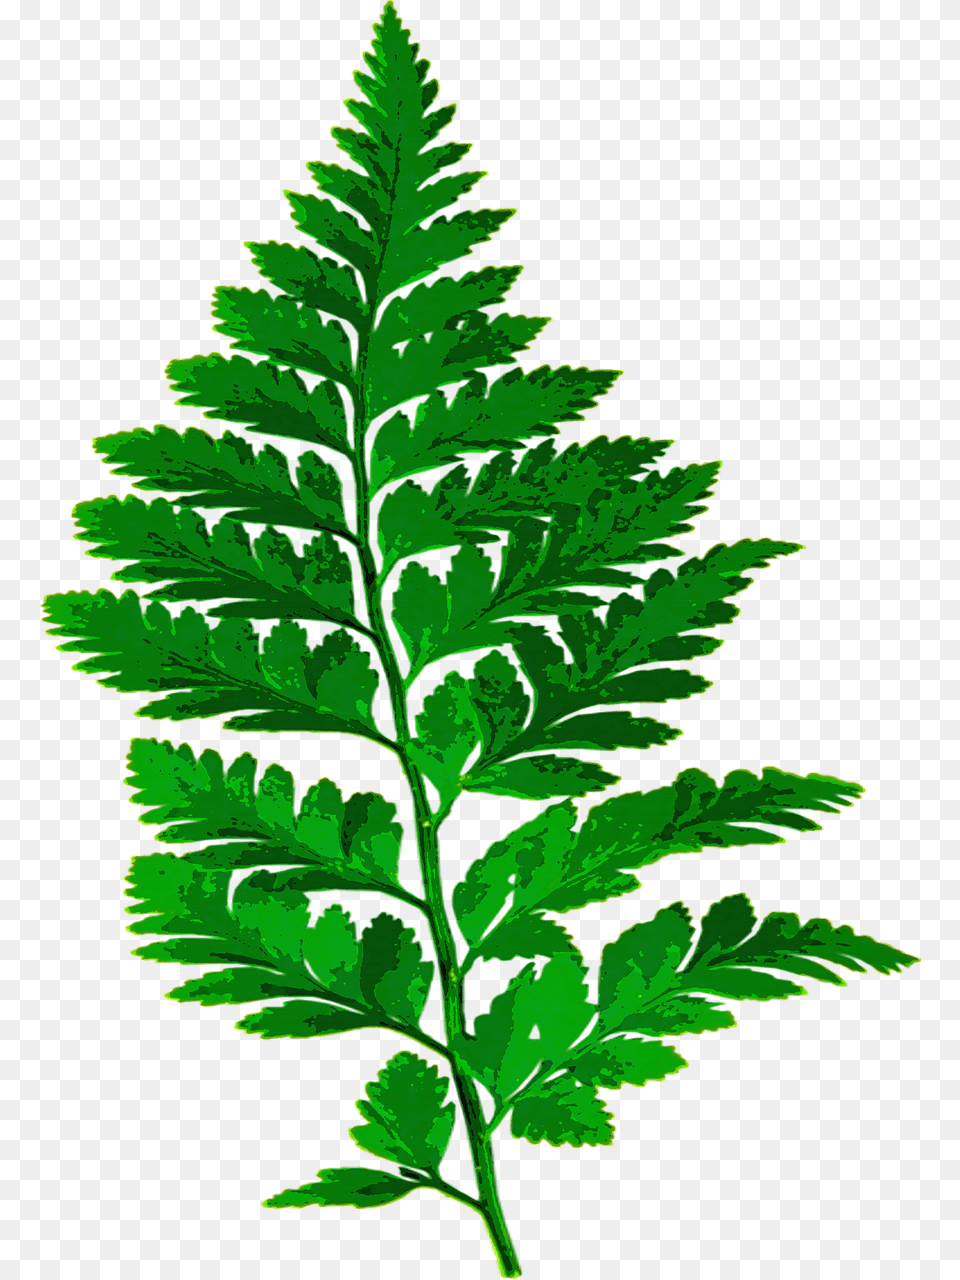 Fern Leaf Nature Green Leaves Fern Leaf Silhouette, Plant, Herbs Png Image